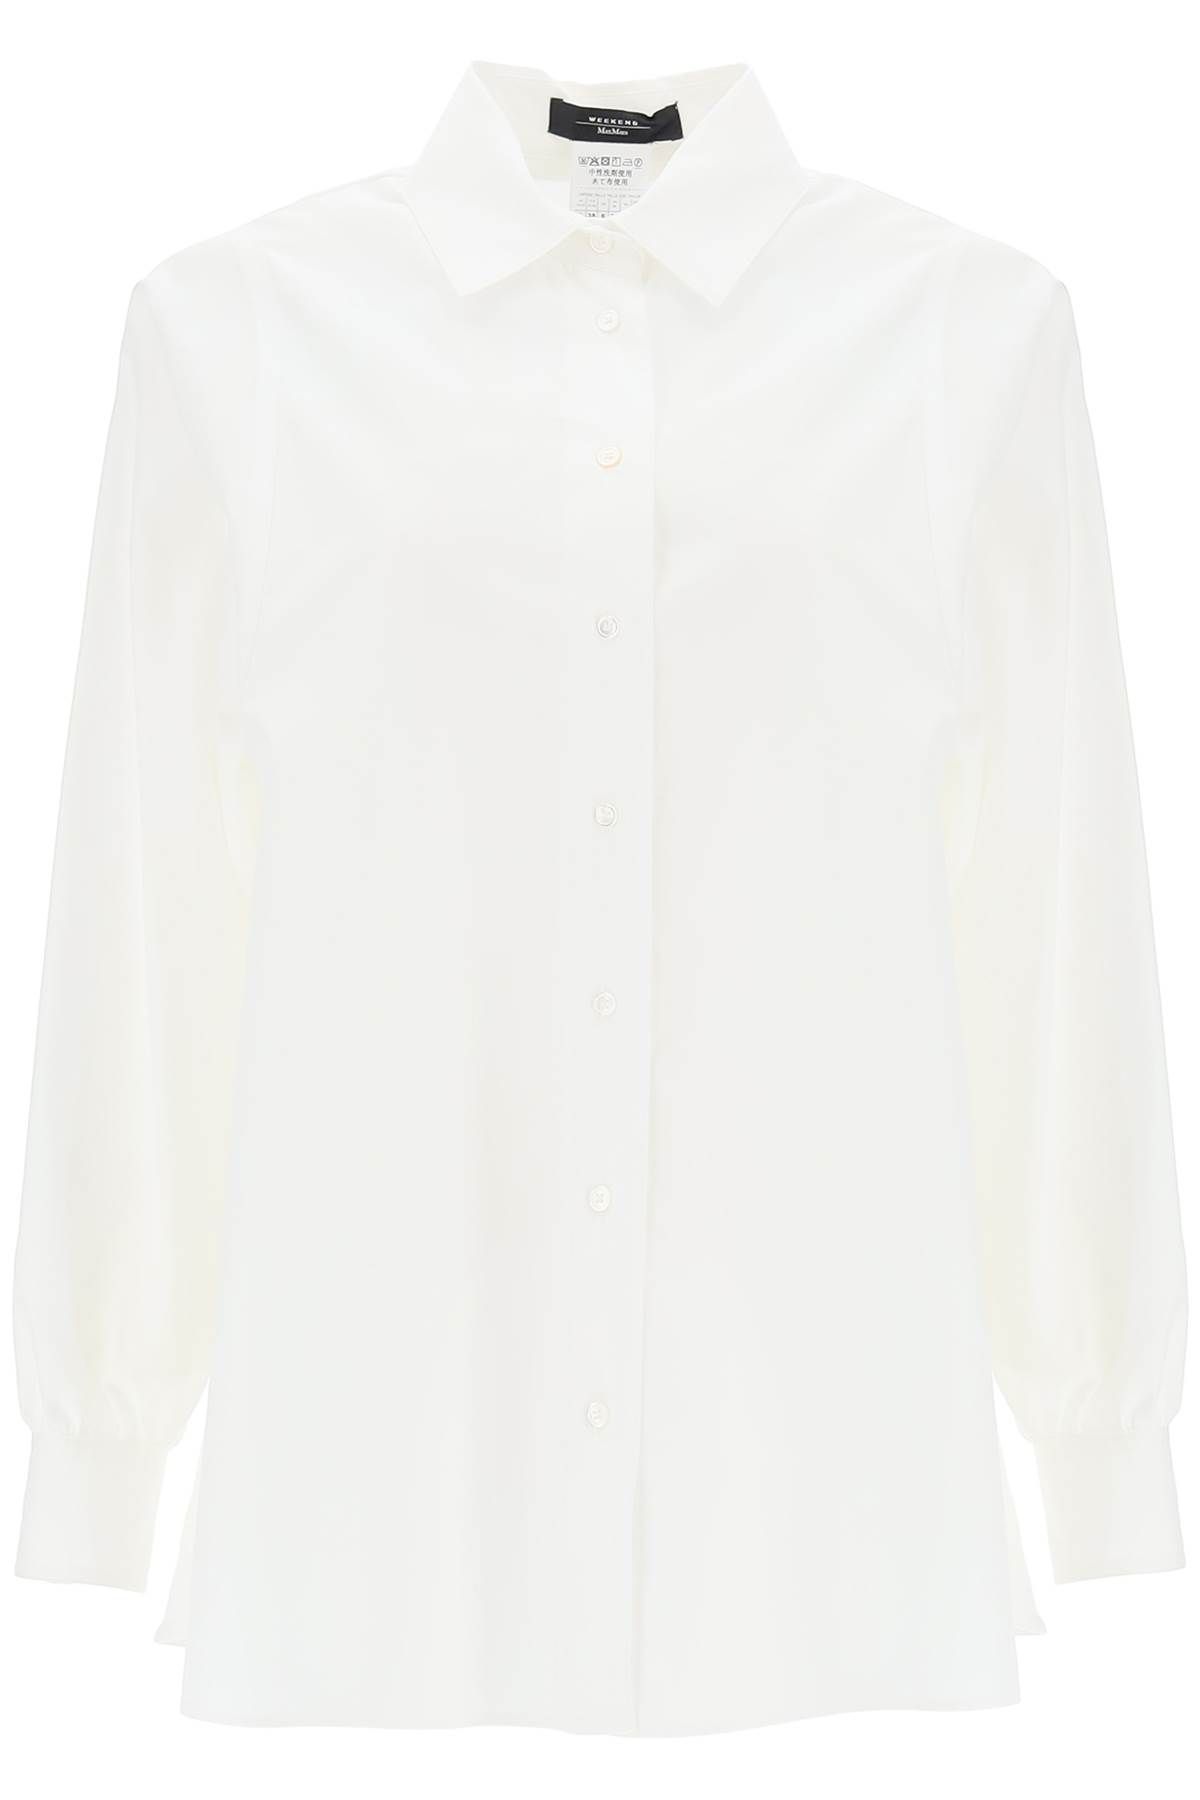 Weekend Max Mara Cotton Poplin Shirt In Optical White